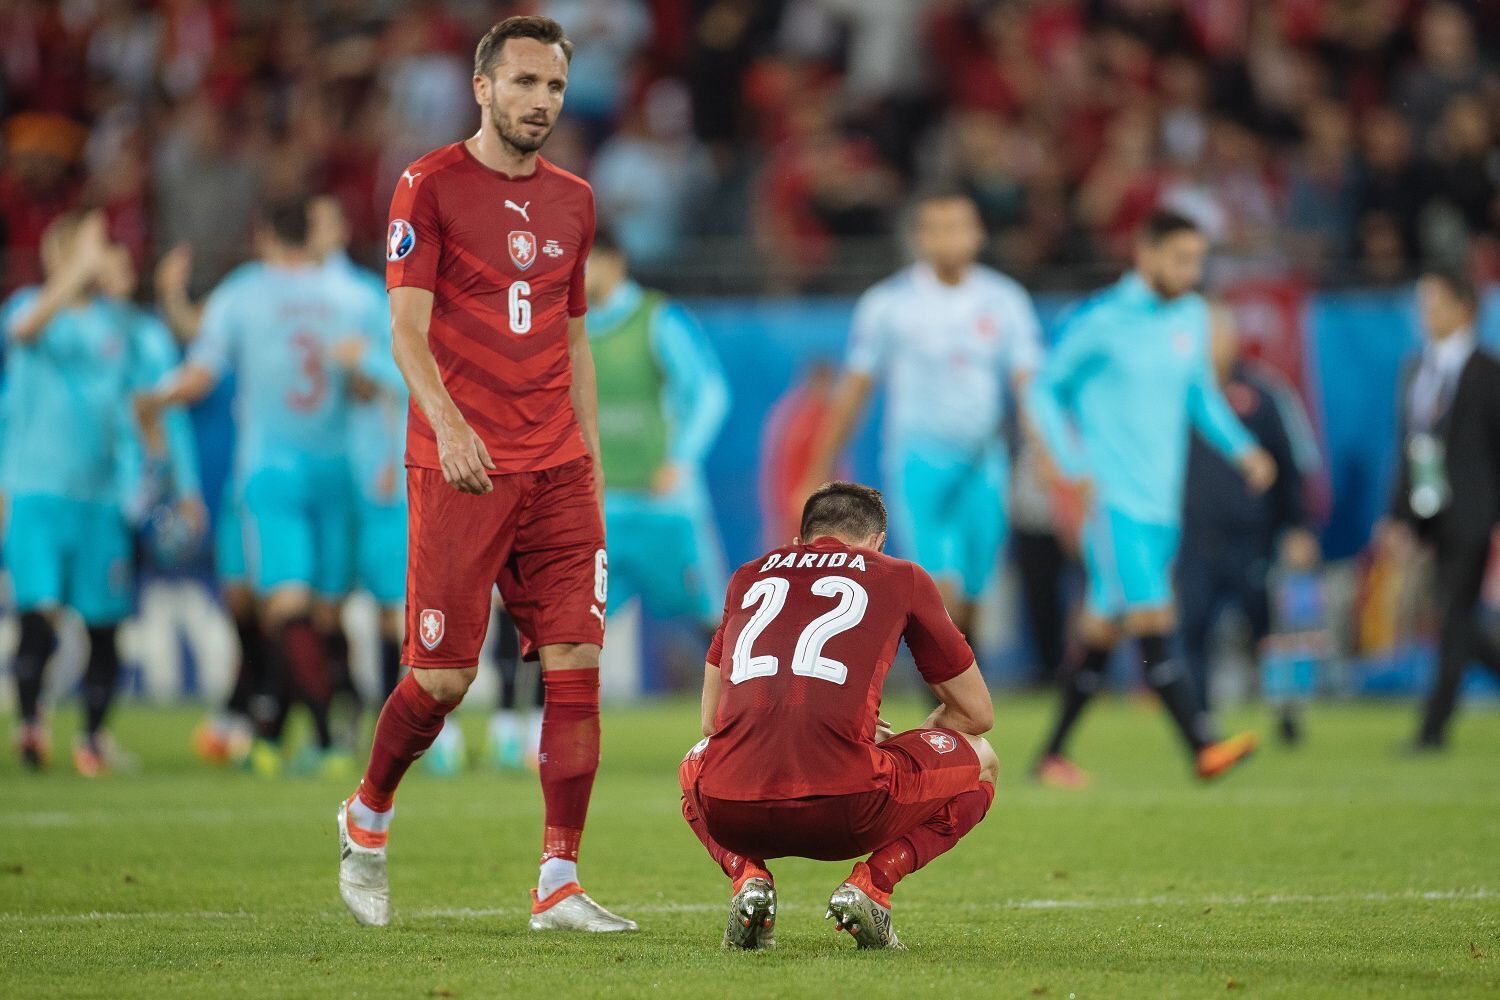 Euro 2016, Česko-Turecko: český smutek